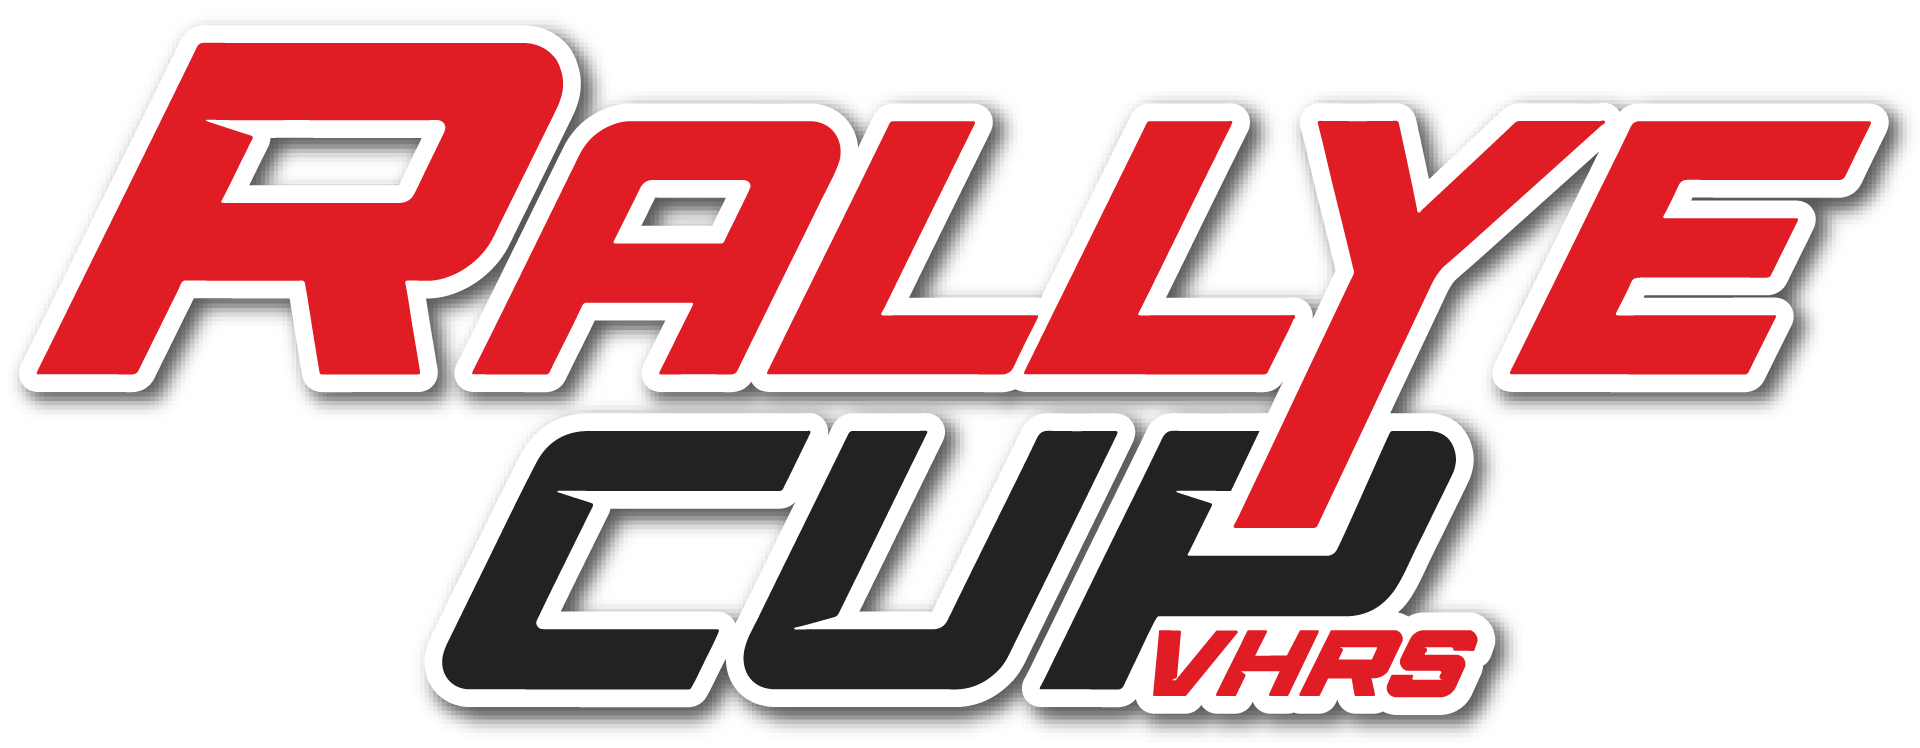 Logo-Rallye-Cup-VHRS-Ombre-l